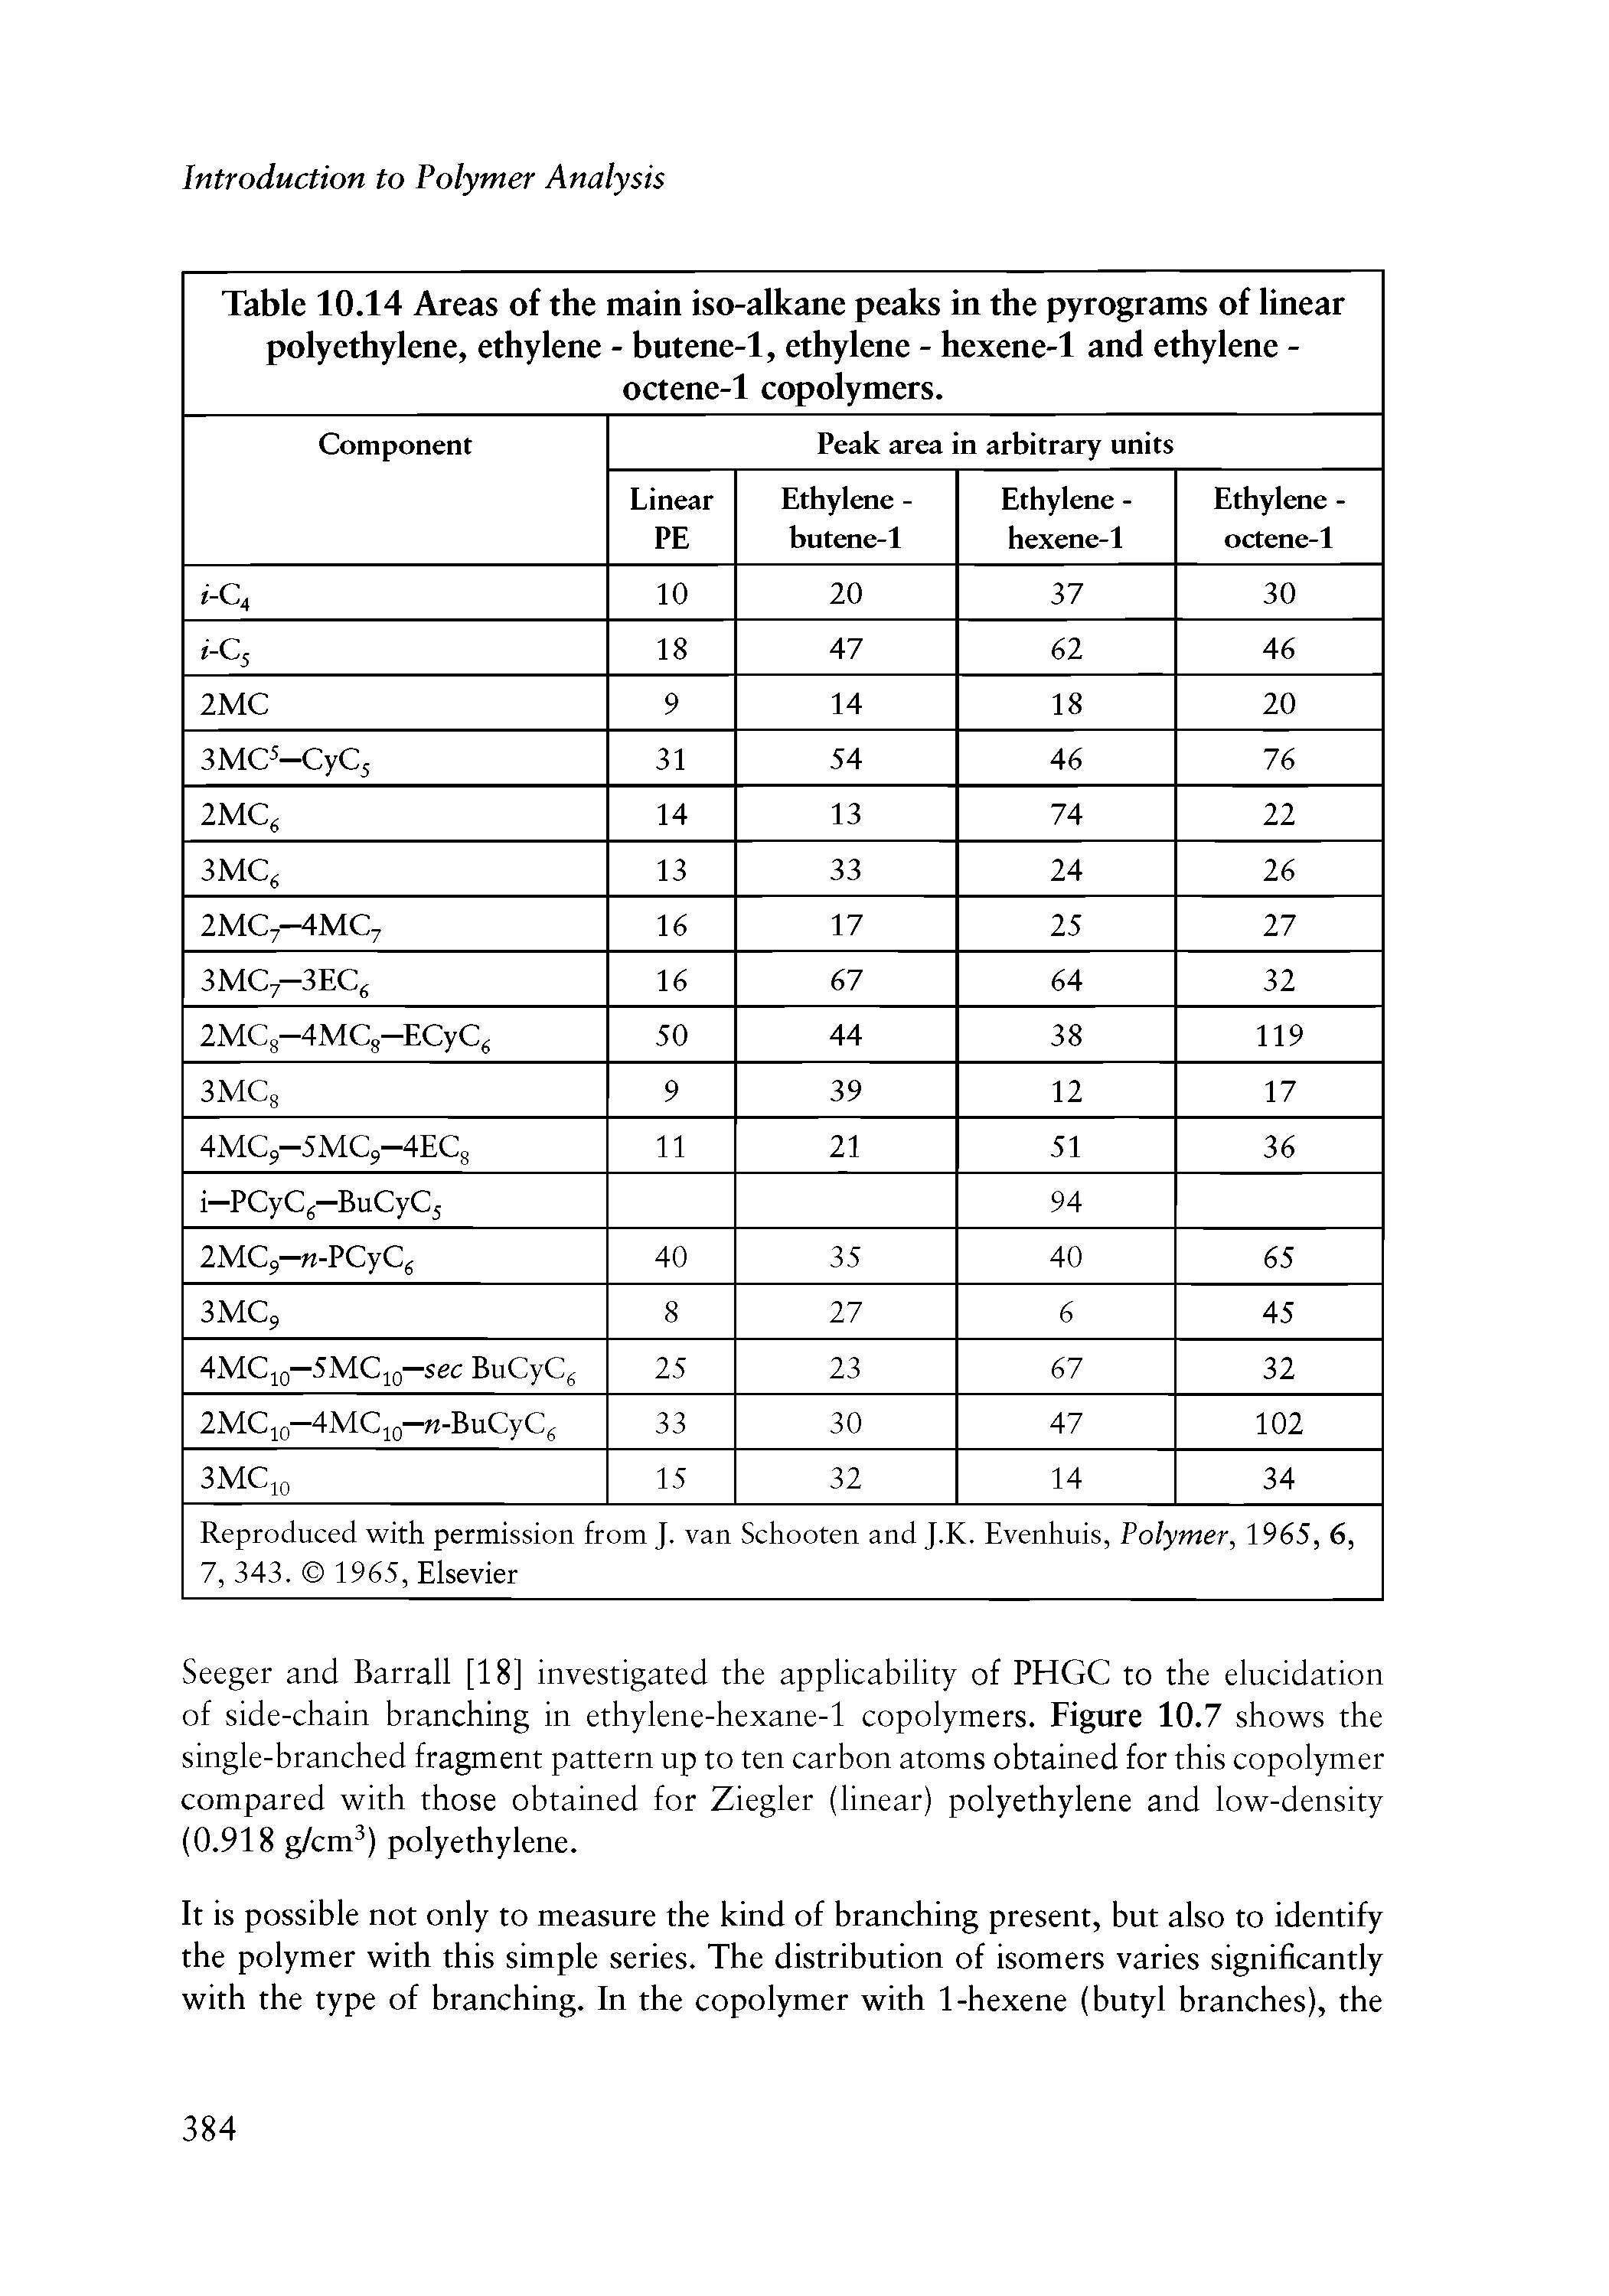 Table 10.14 Areas of the main iso-alkane peaks in the pyrograms of linear polyethylene, ethylene - butene-1, ethylene - hexene-1 and ethylene - octene-1 copolymers. ...